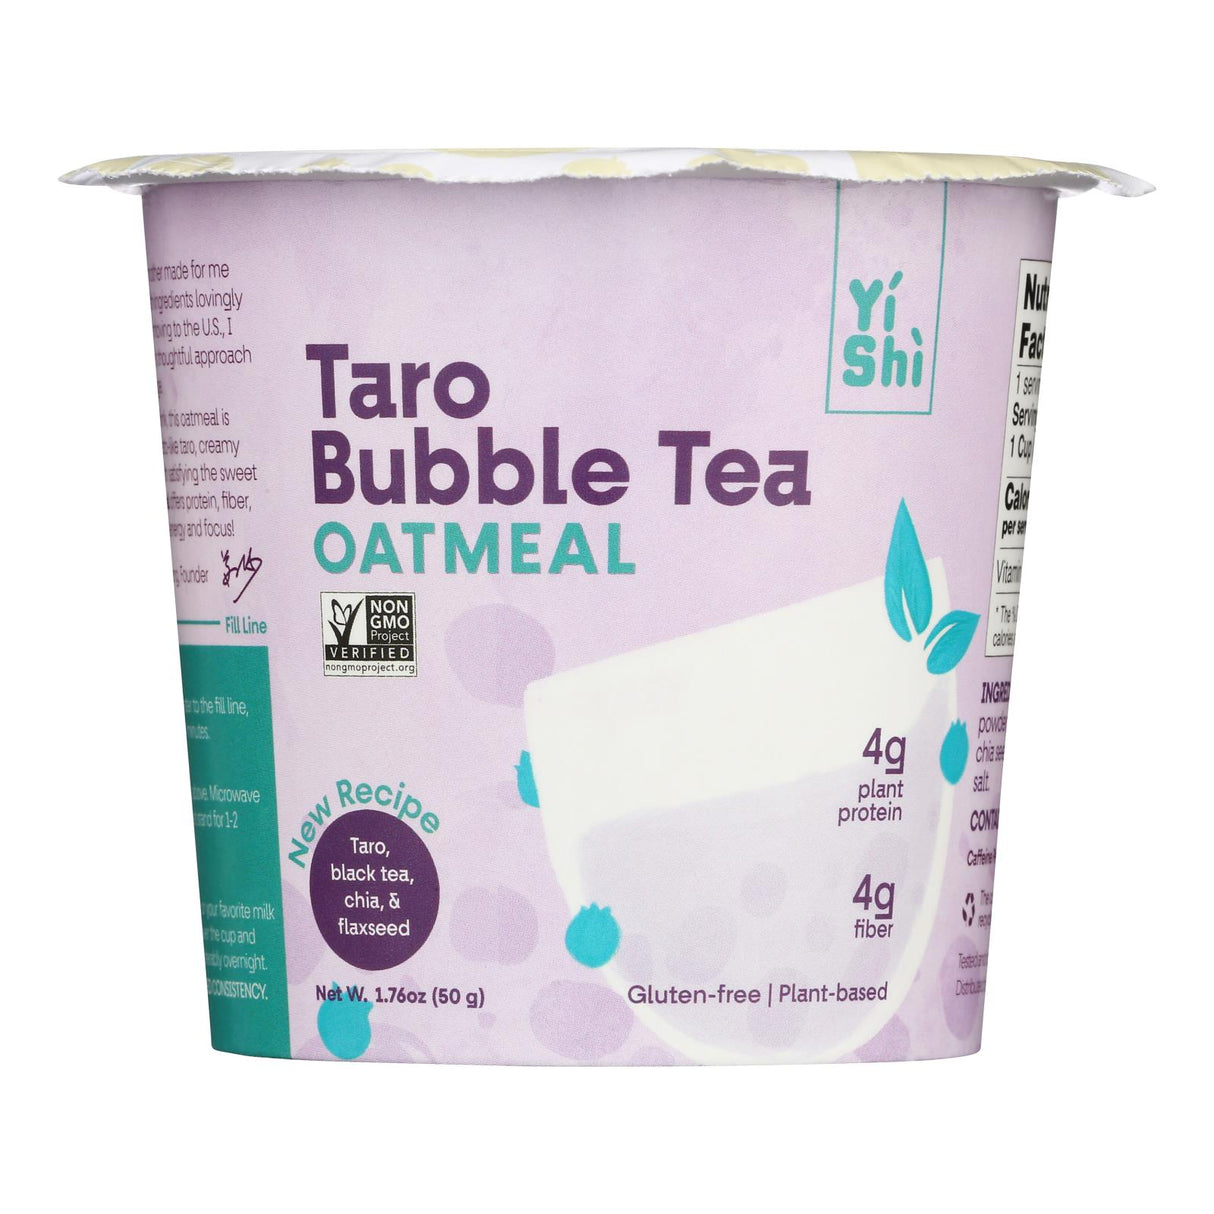 Taro Bubble Tea Oatmeal with Real Tapioca Pearls - Yishi Oatmeal Cup - Pack of 6 - 1.76 Oz - Cozy Farm 